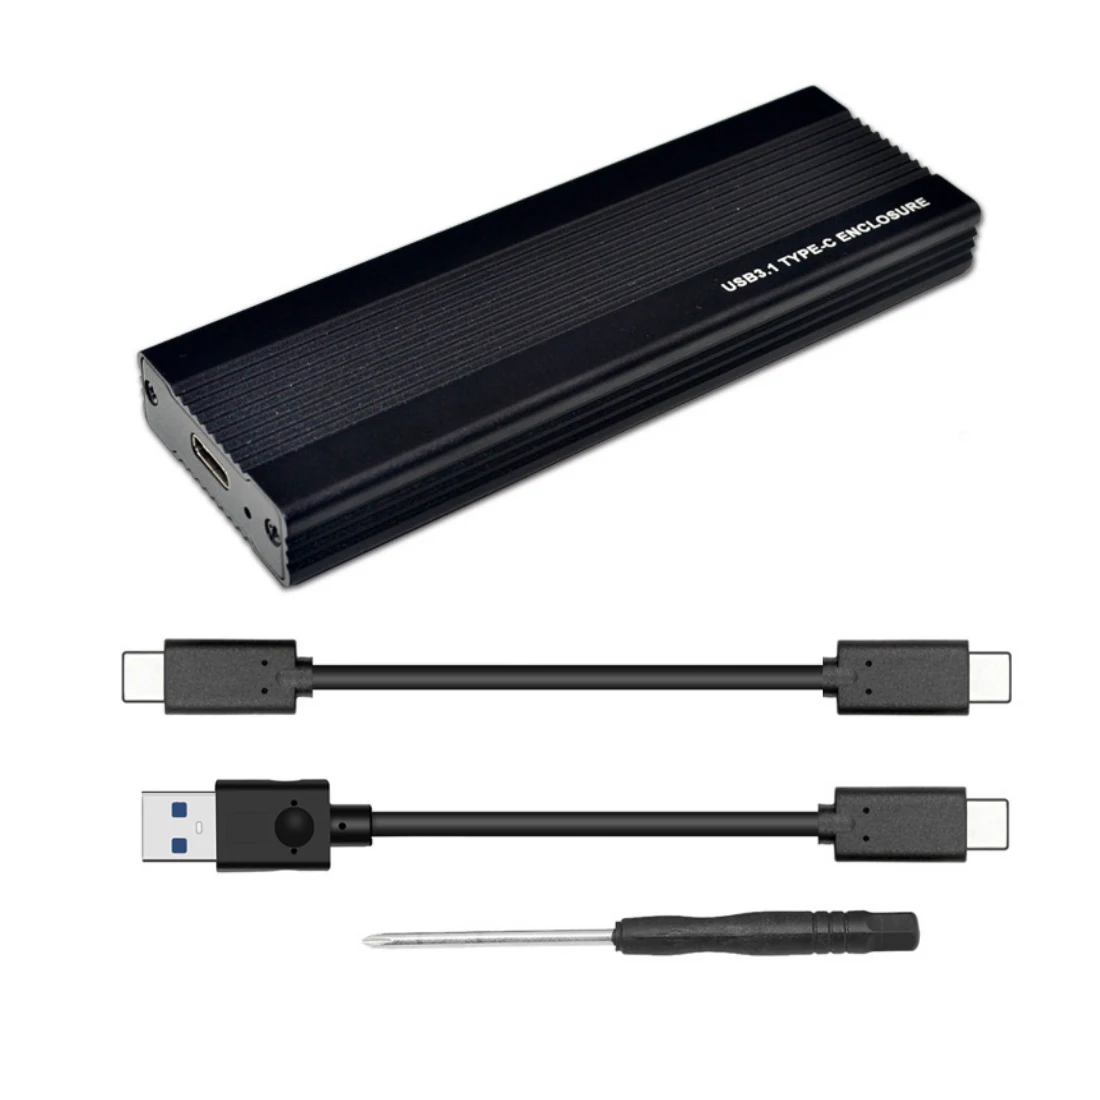 

H1111Z NVME SSD Enclosure PCI-E M.2 to USB 3.1 Type-C Adapter USB C 10Gbps RTL9210 M2 M Key PCIE Hard Drive Disk External Box M2